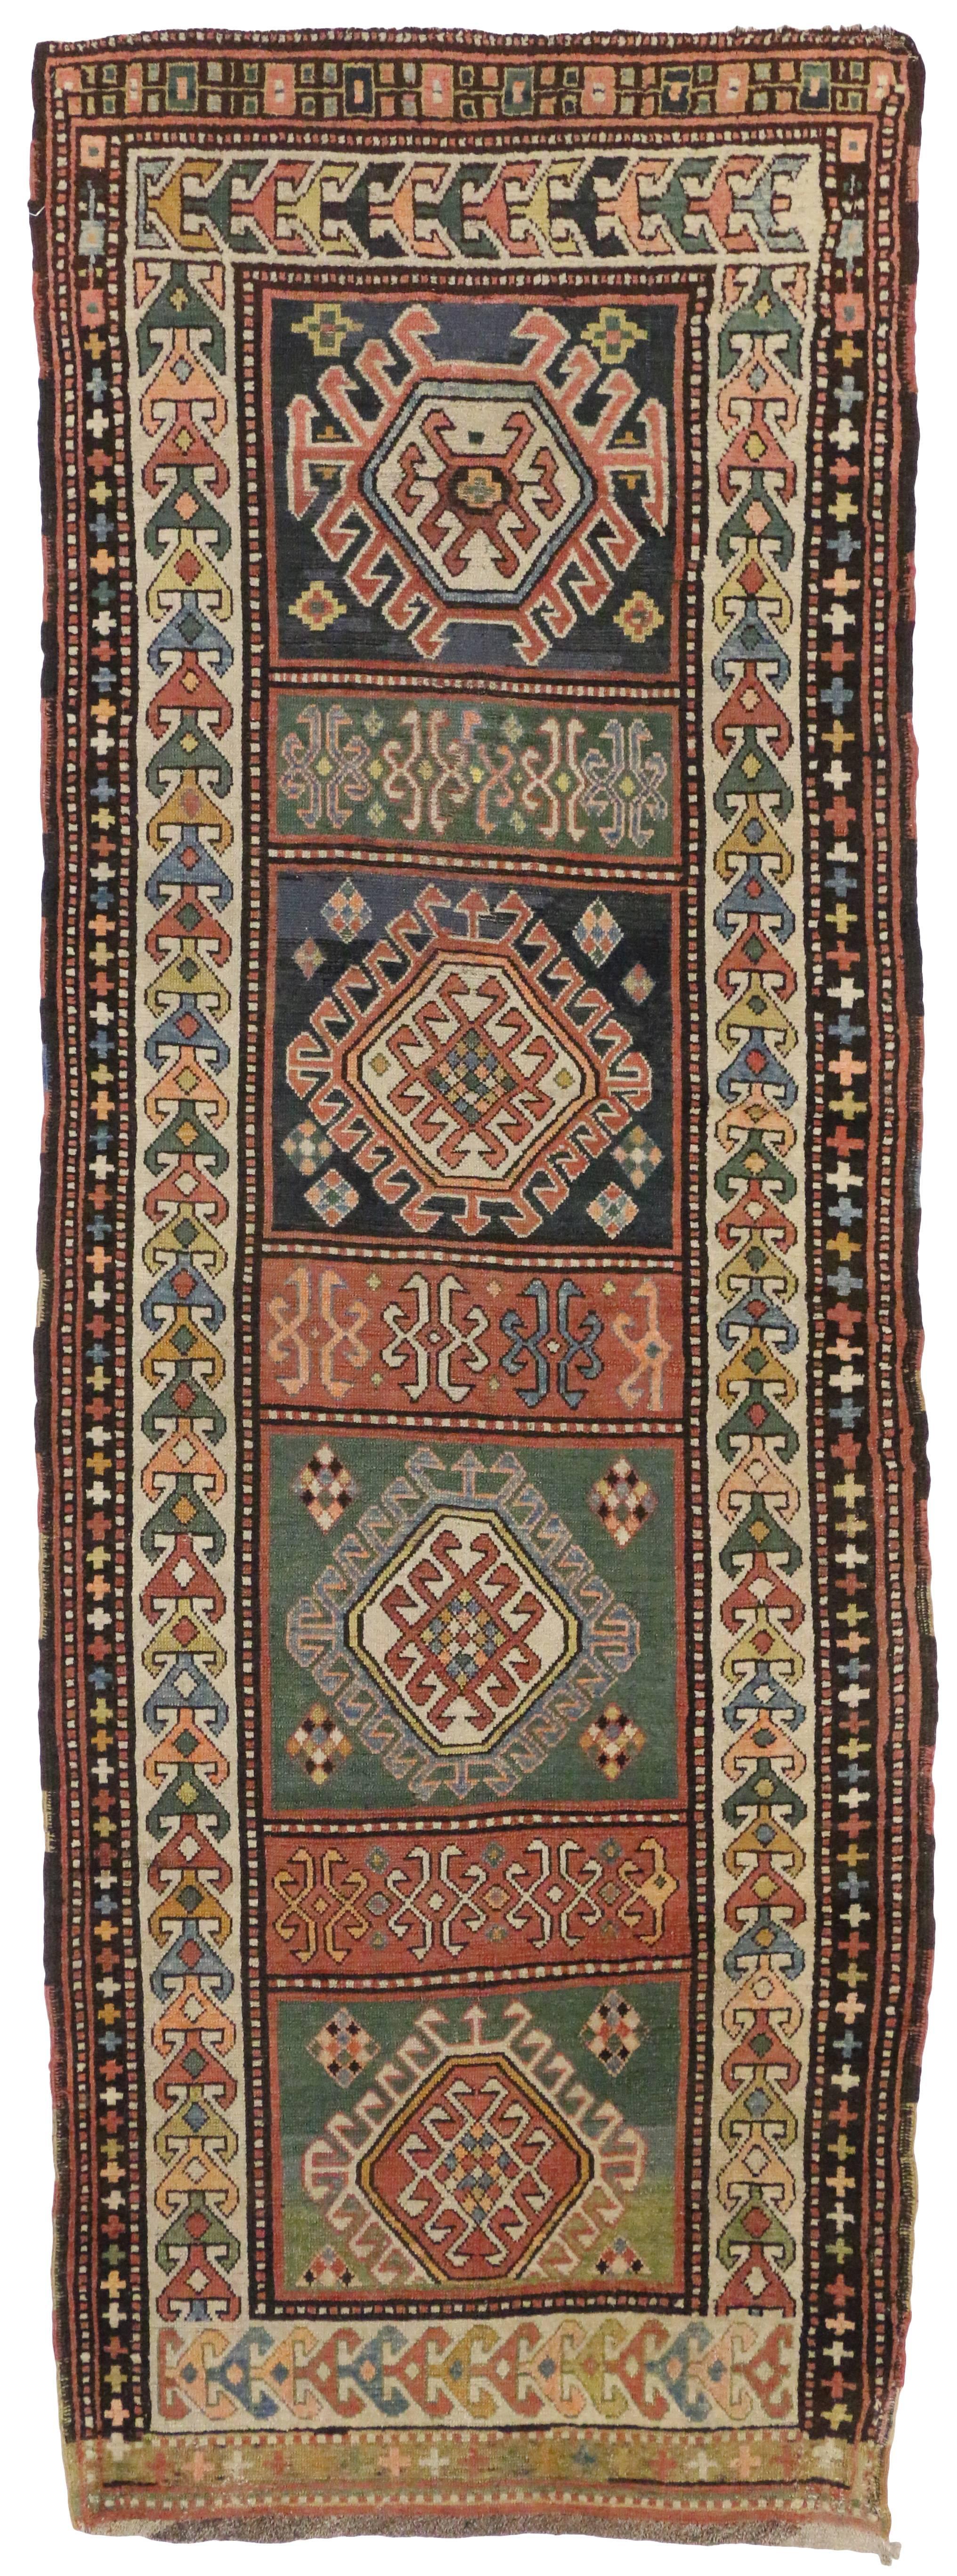 Rustic Tribal Style Antique Caucasian Kazak Rug, Wide Hallway Runner 4